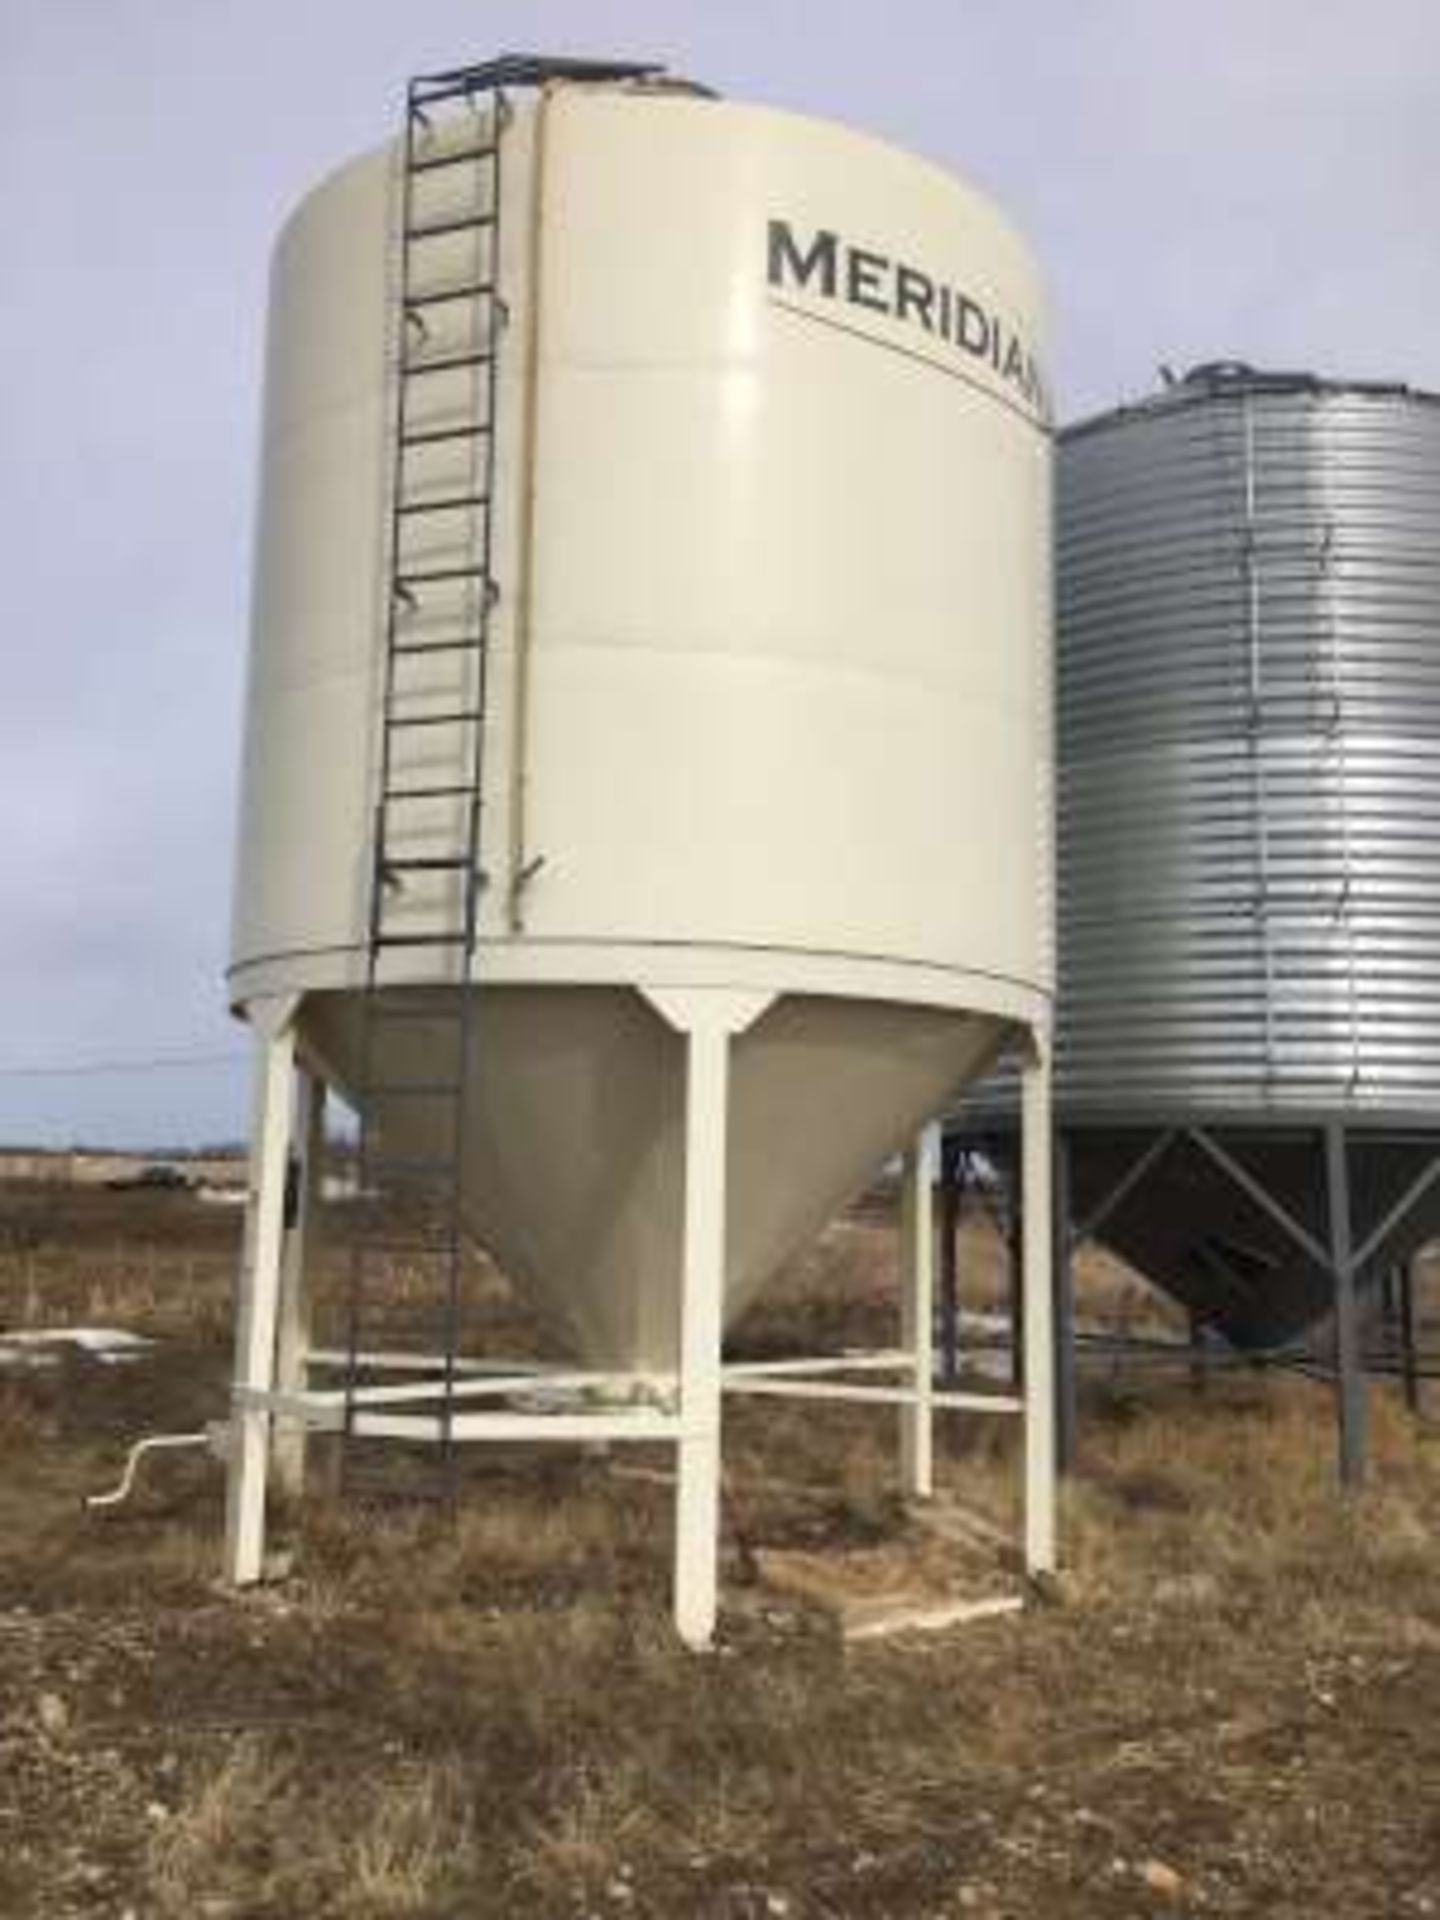 2011 Meridian M1412L (15350 Imp. gal) liquid fertilizer hopper bin with valves w/slide that can be